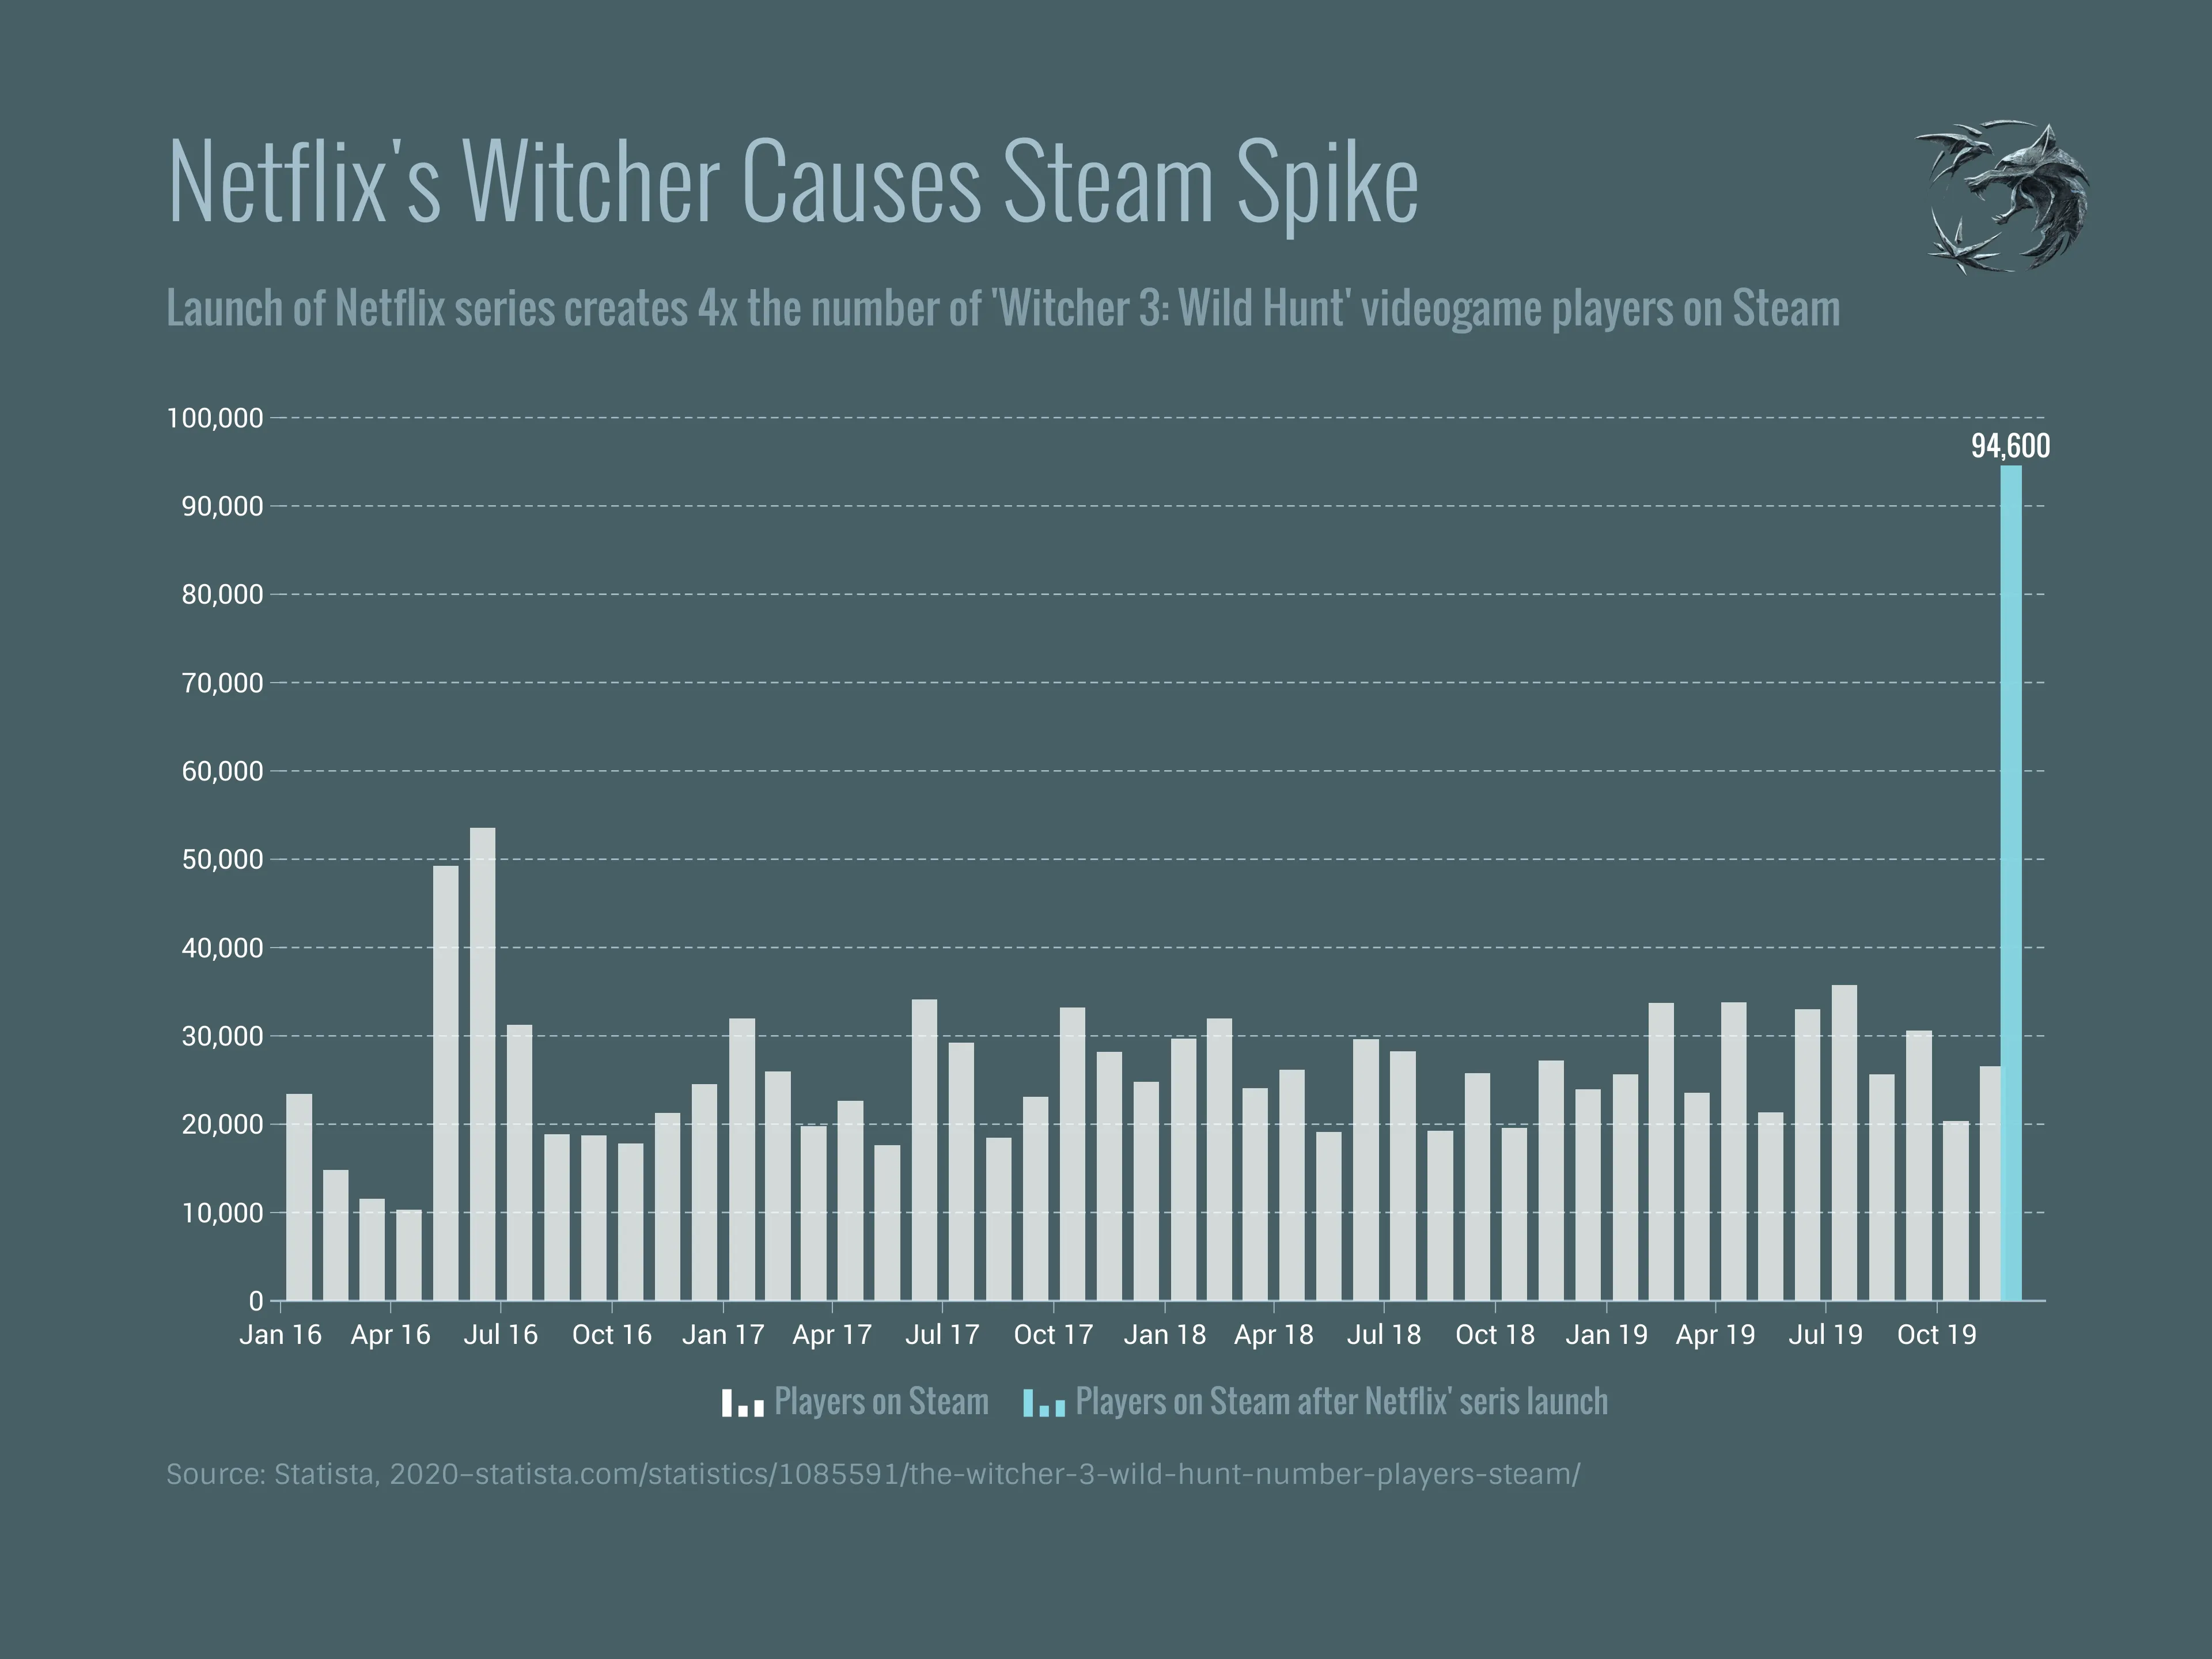 Netflix's Witcher Causes Steam Spike